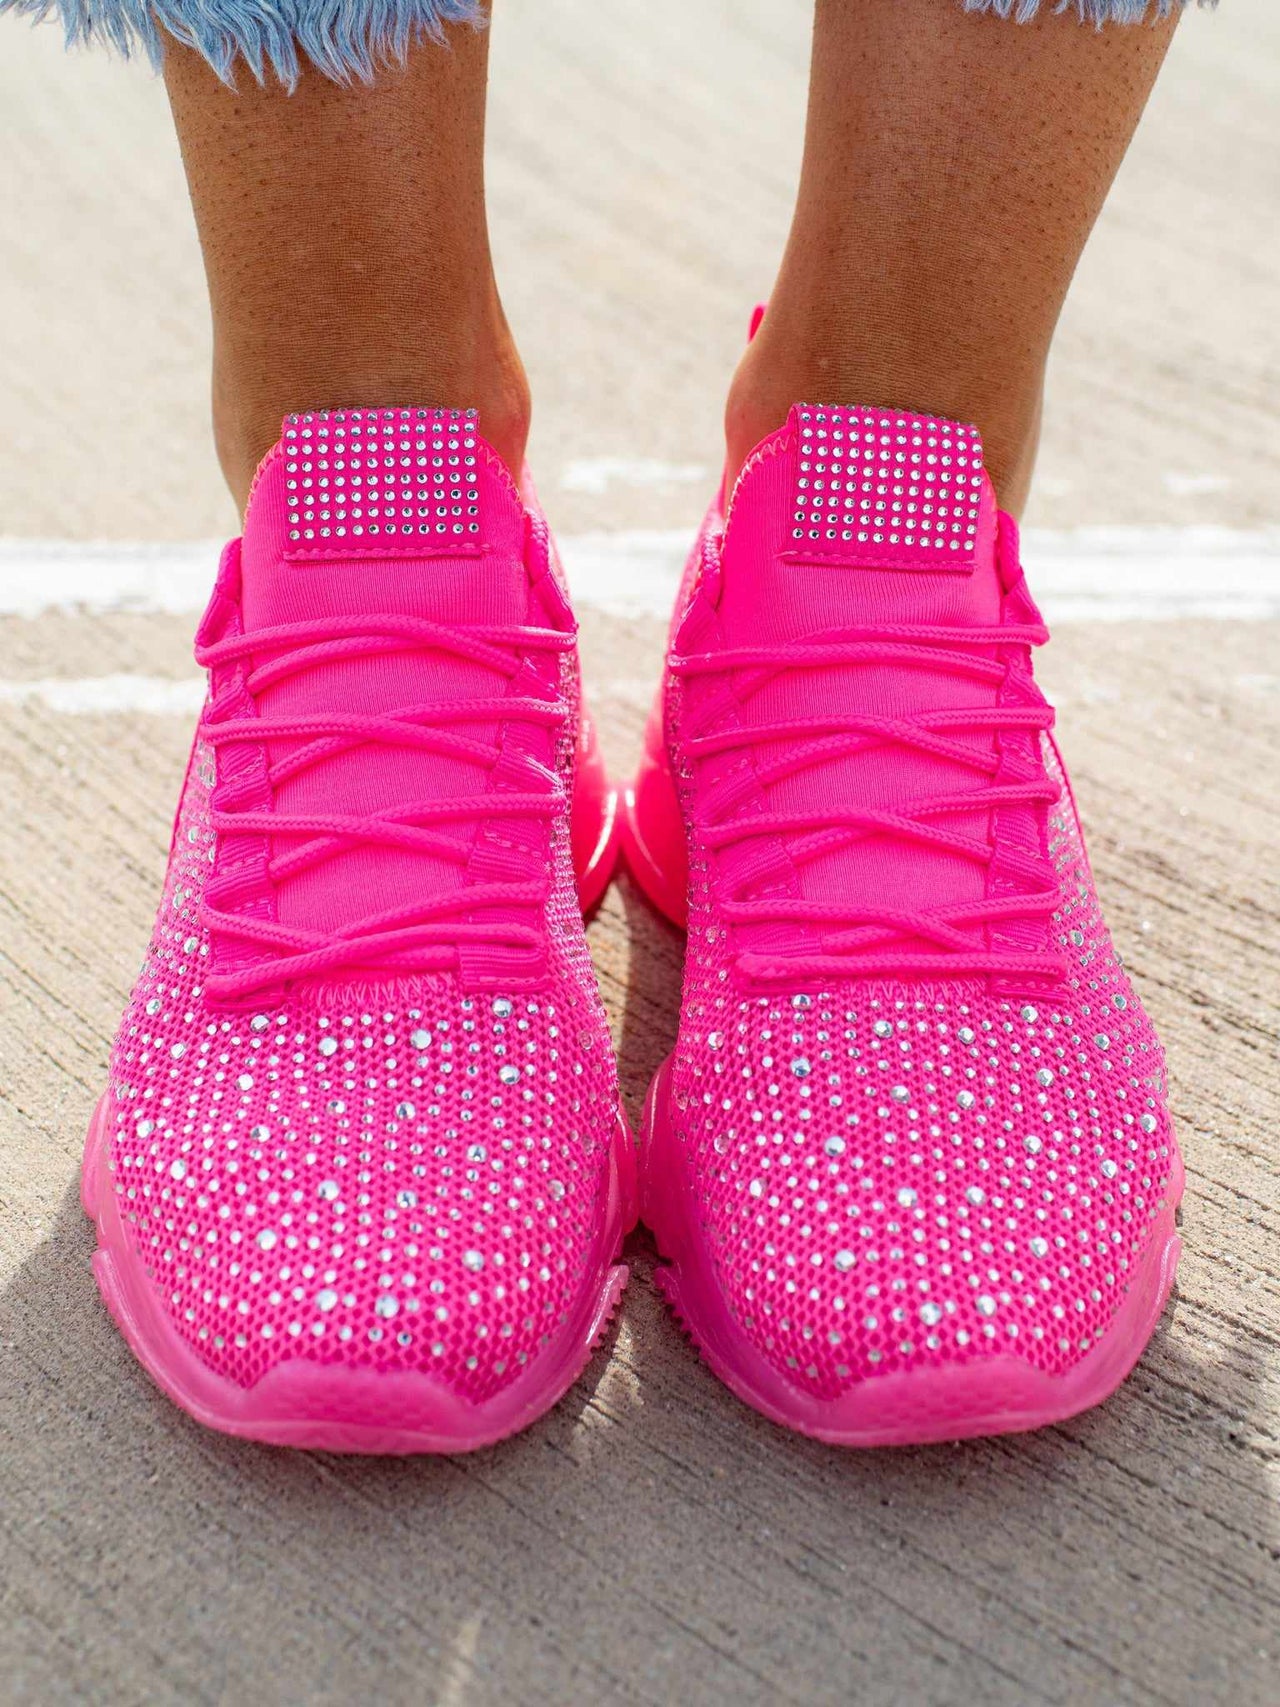 Hot pink rhinestone sneakers barbicore.